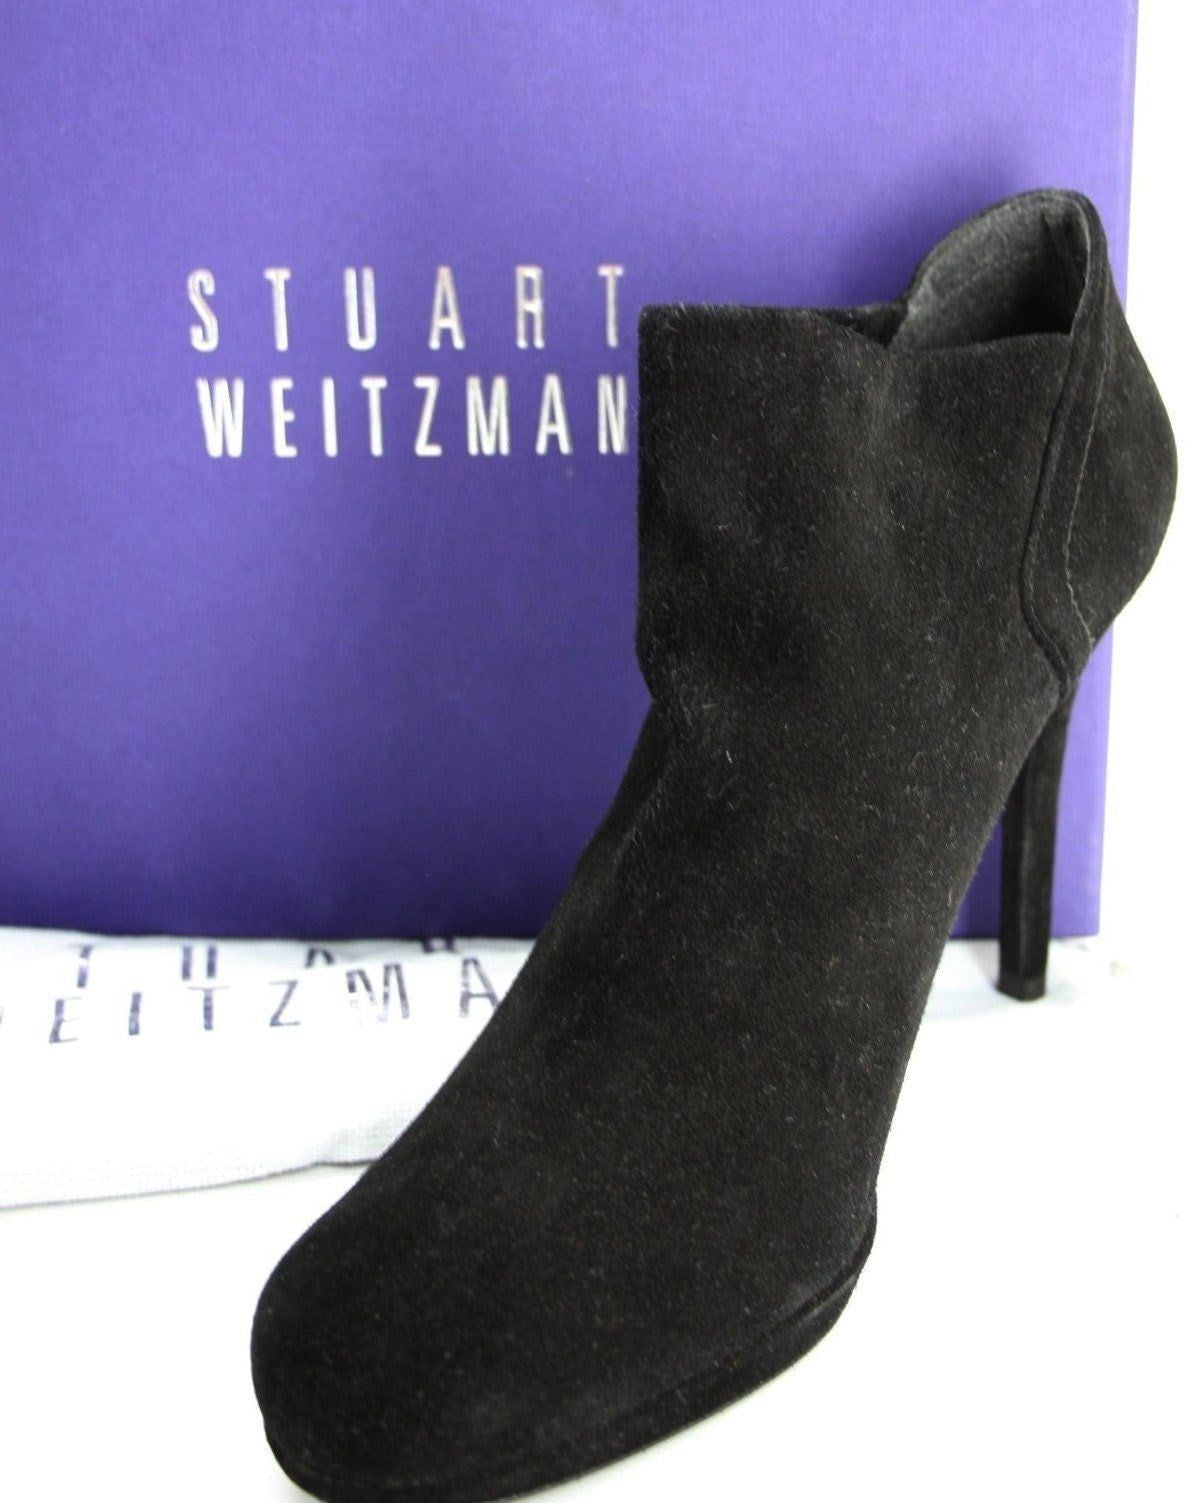 Stuart Weitzman Black Suede Bluster High Heel Ankle Boots Size 10 NEW $395